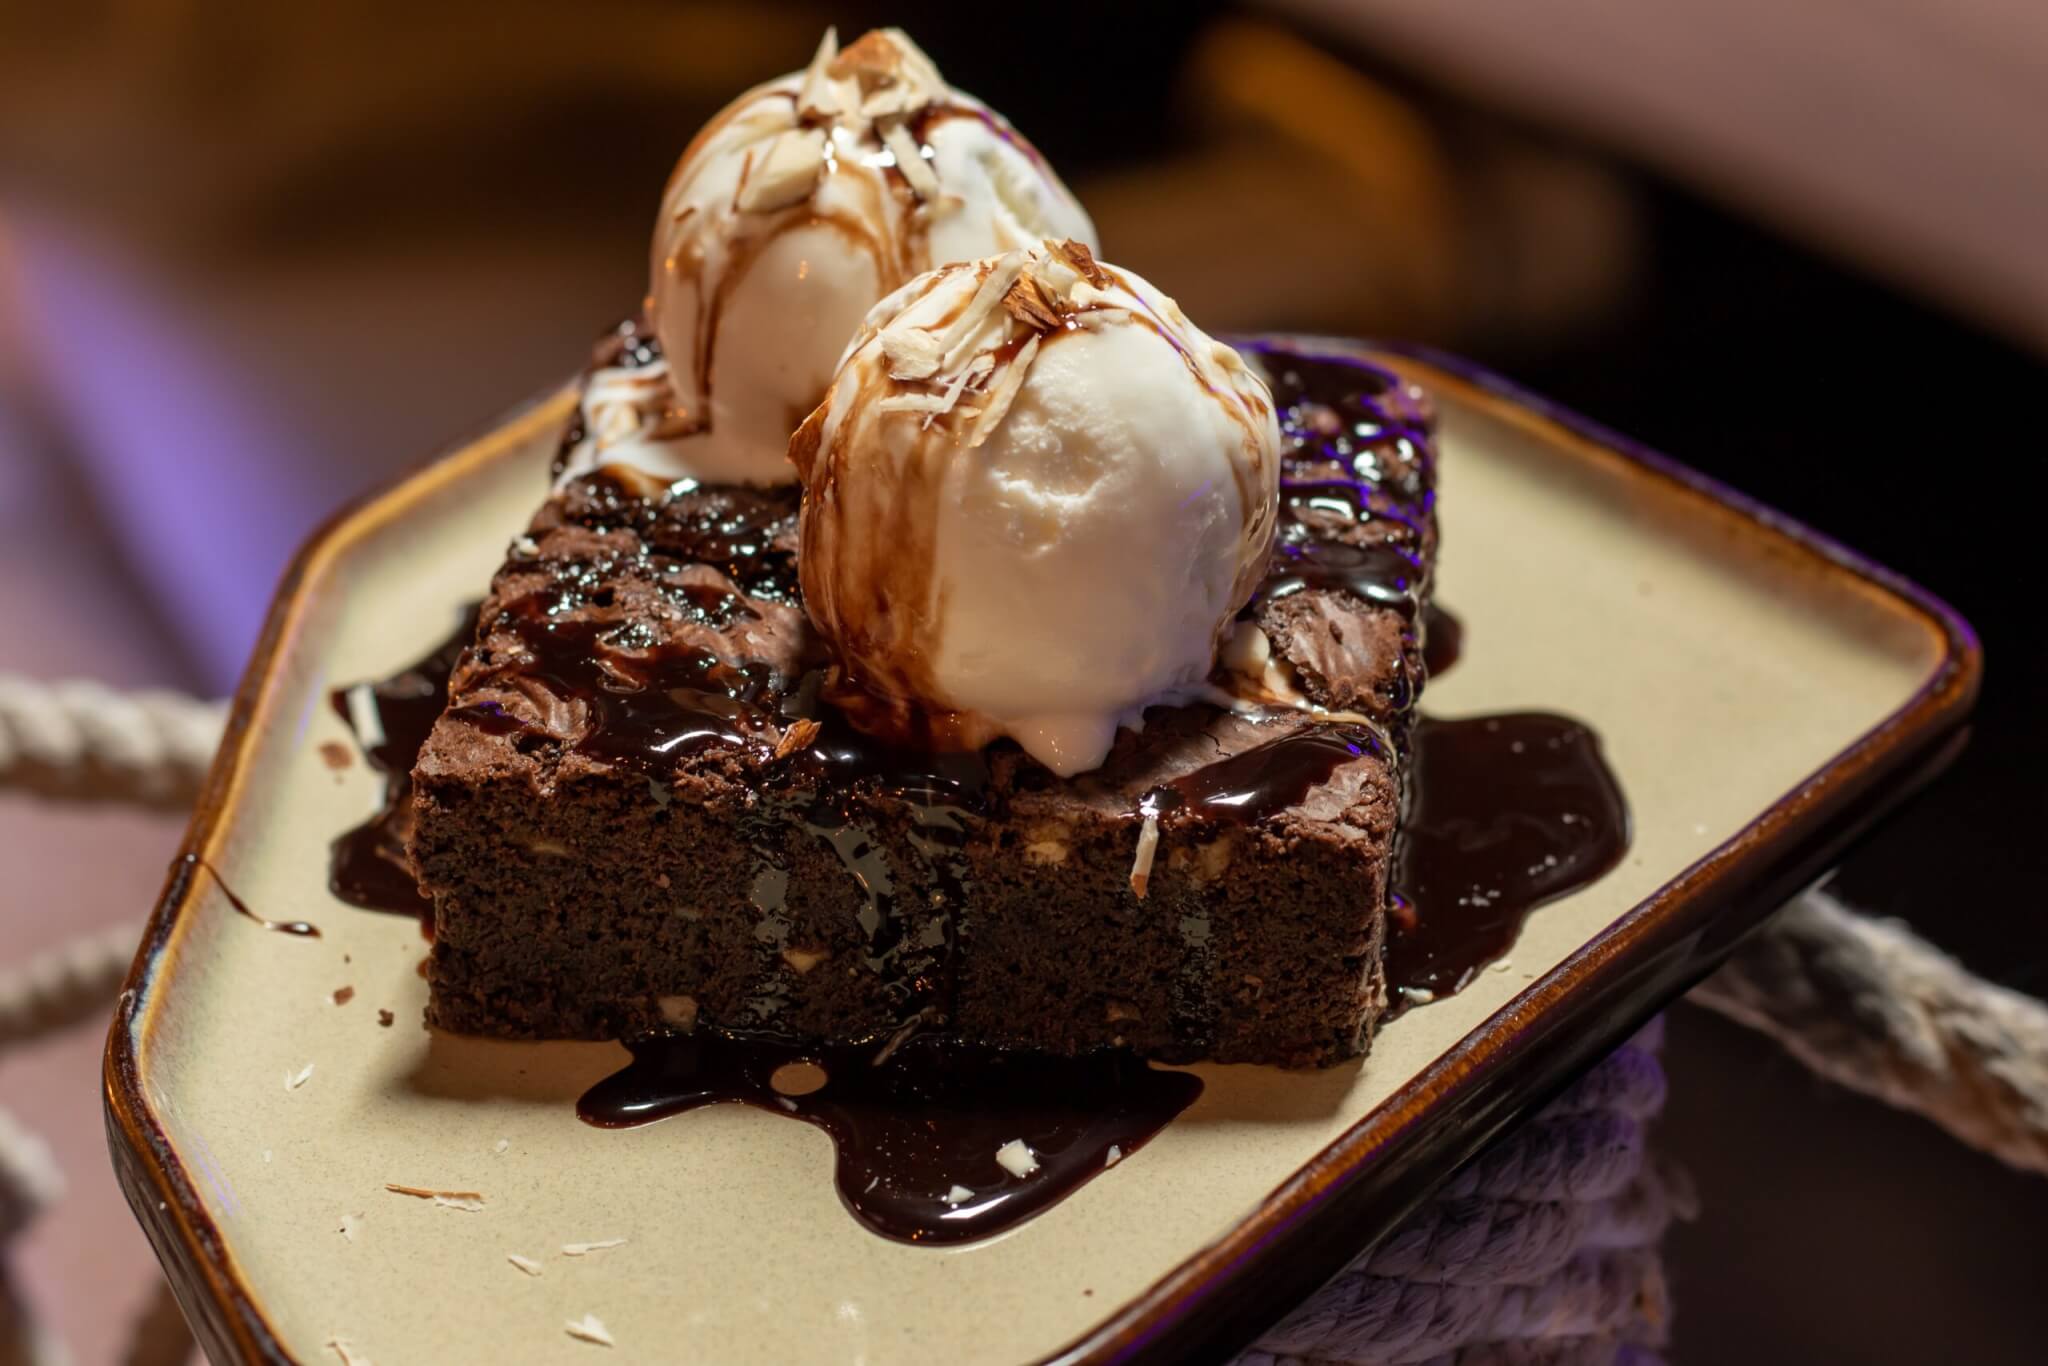 Chocolate dessert with ice cream